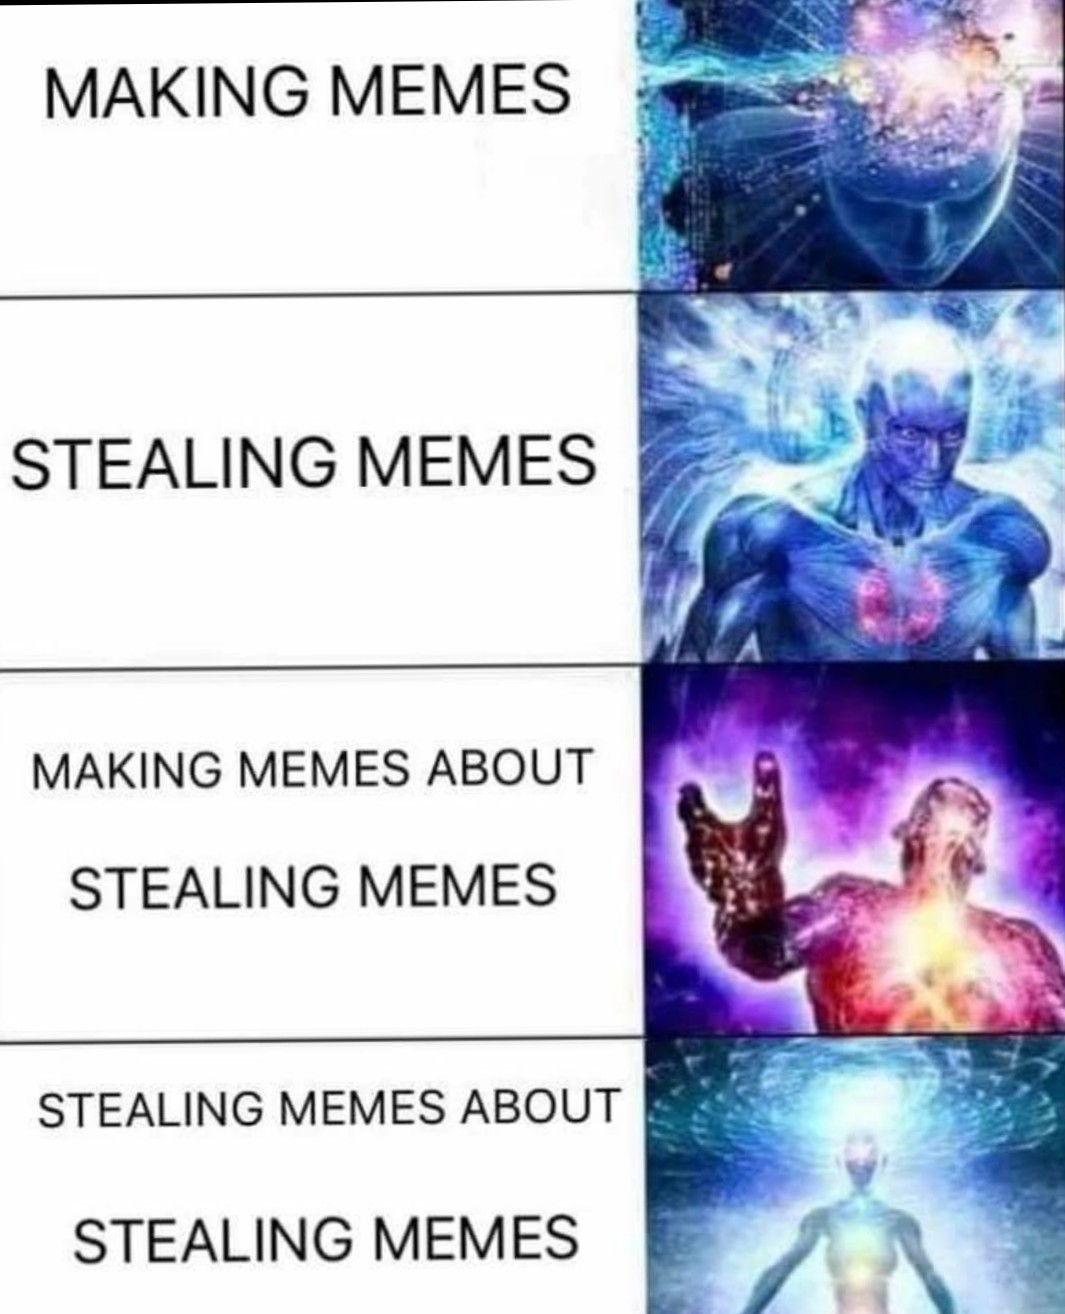 Stolen meme